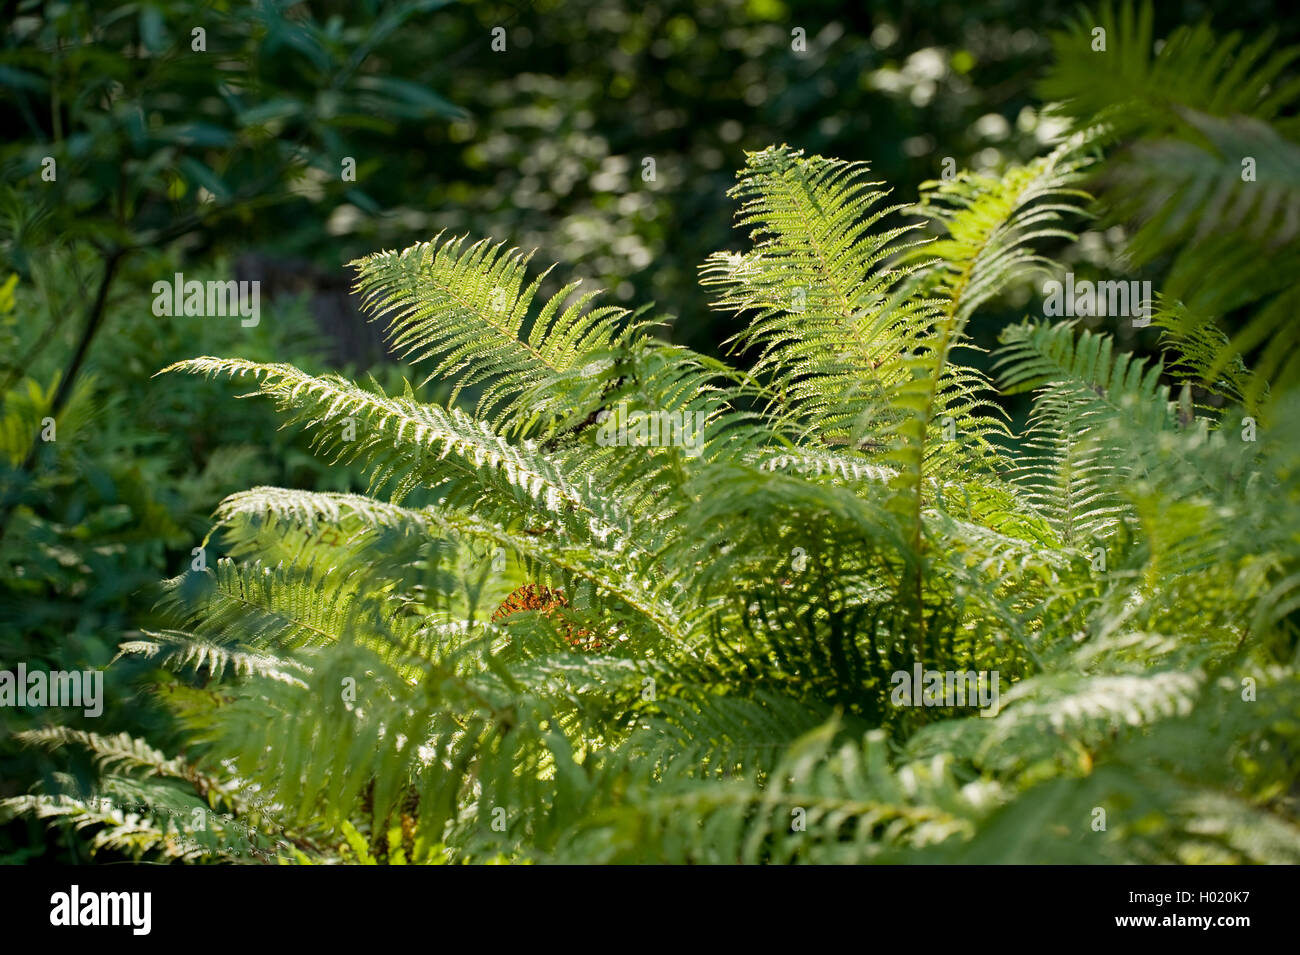 Golden Shield Fern, Scaly Male Fern (Dryopteris affinis), fronds, Germany, BG DA Stock Photo